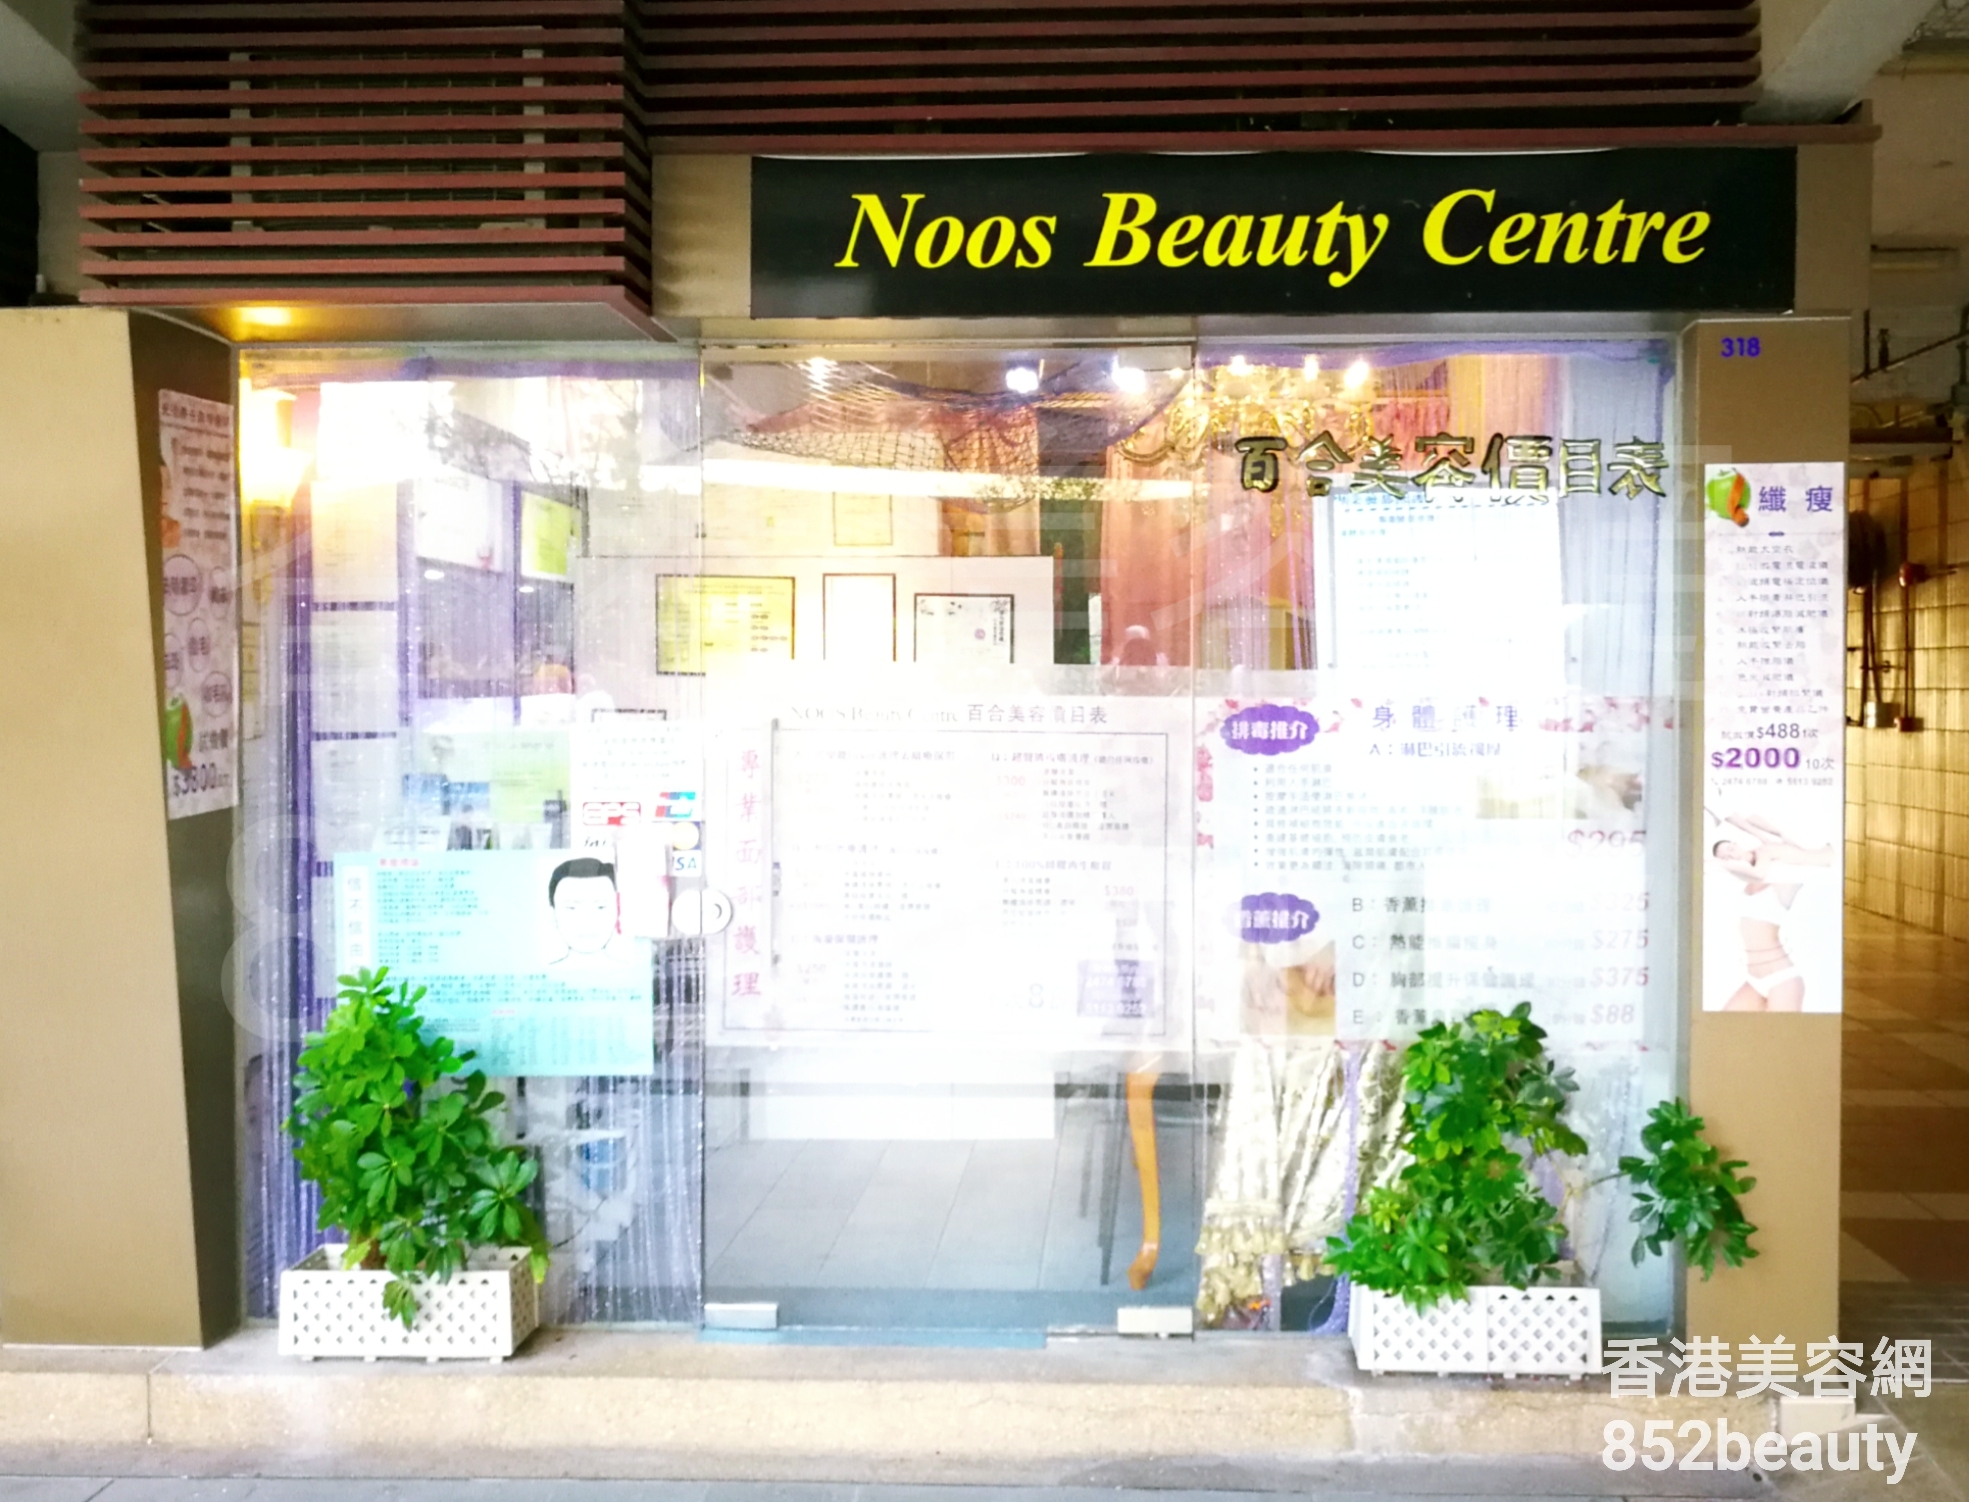 Men Grooming: Noos Beauty Centre